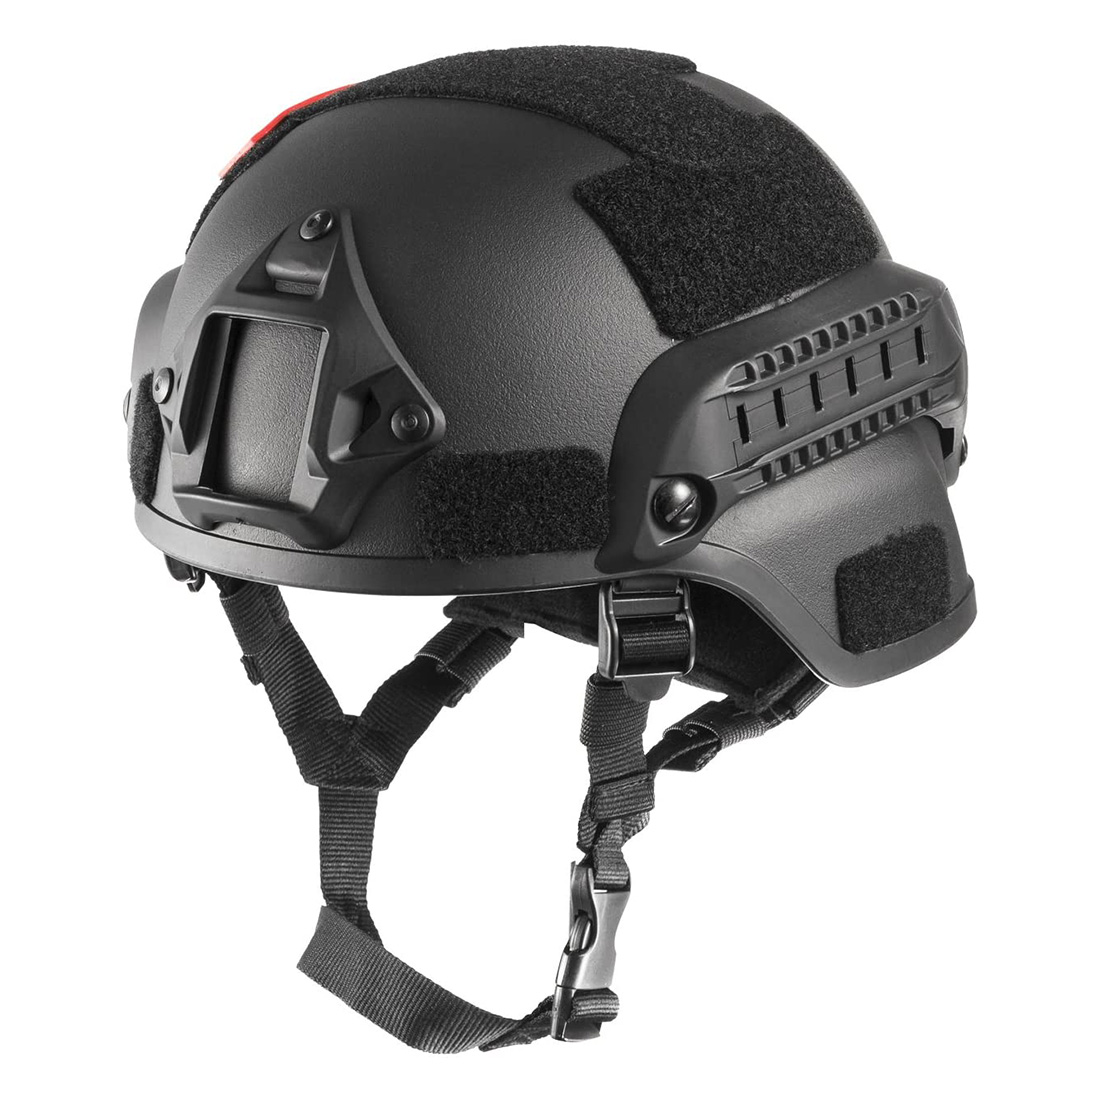 Bulletproof helmets keep you safe